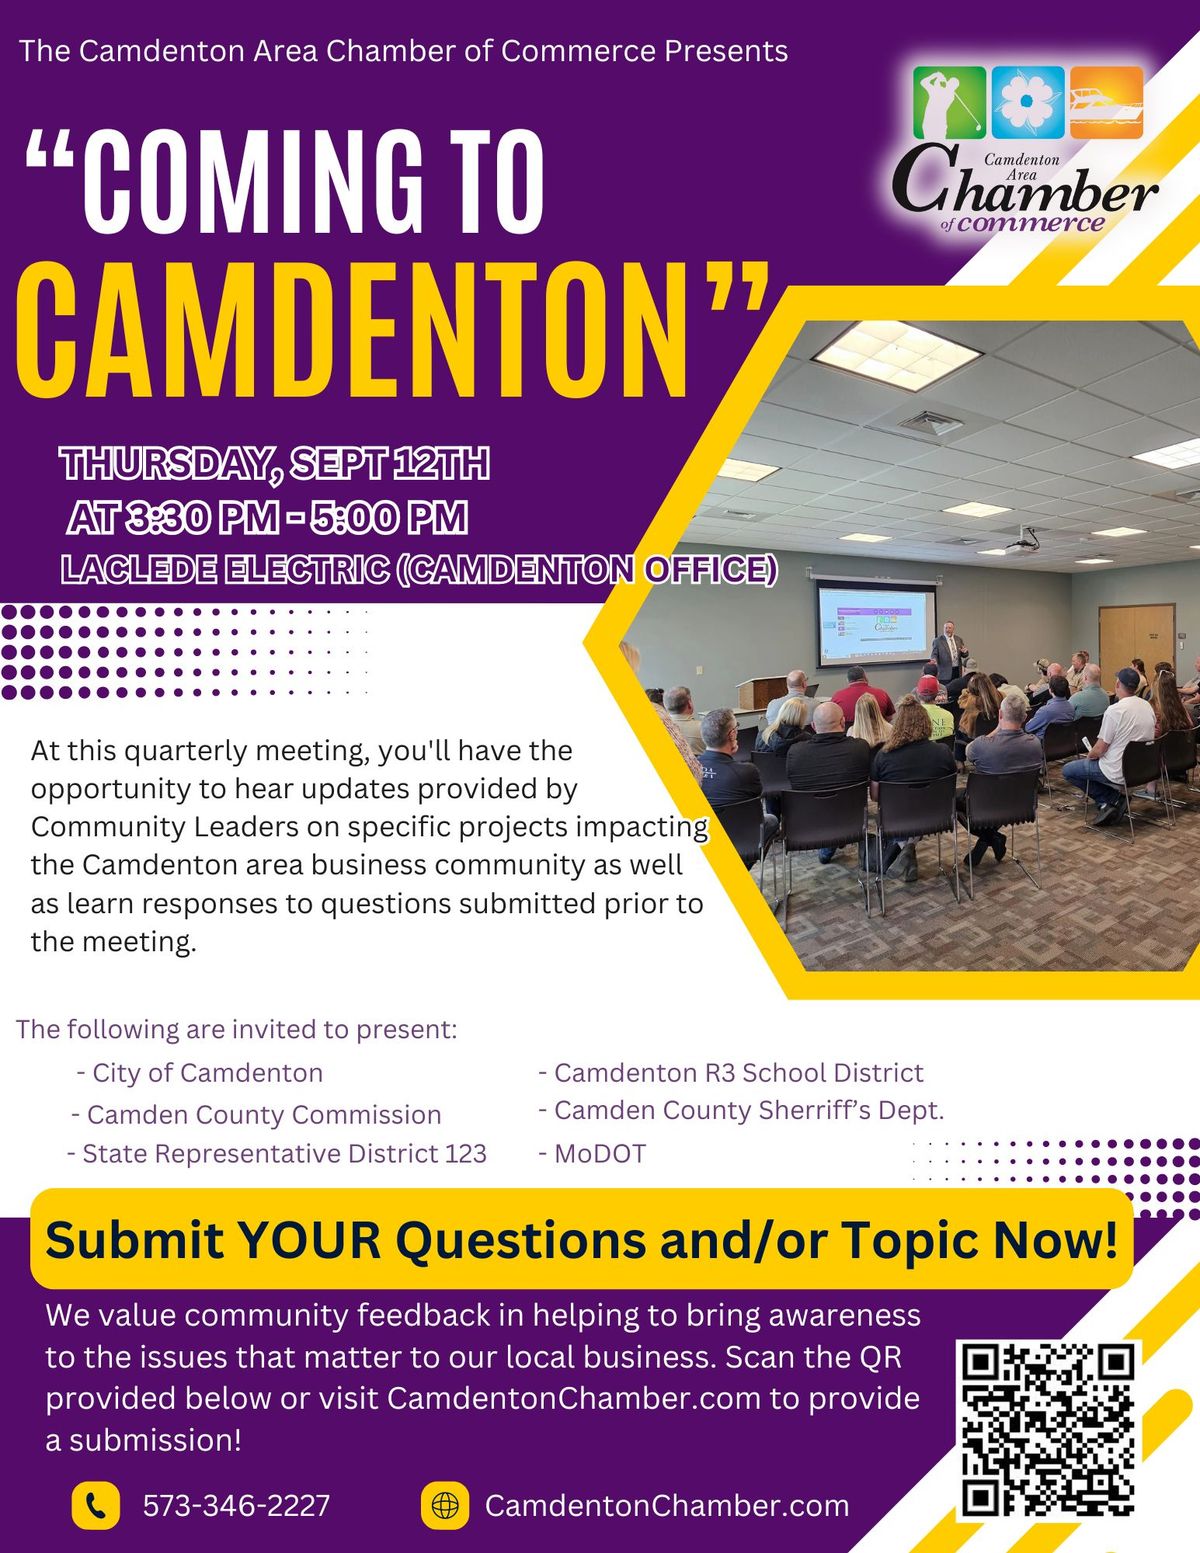 Coming to Camdenton - Business Community Quarterly Update